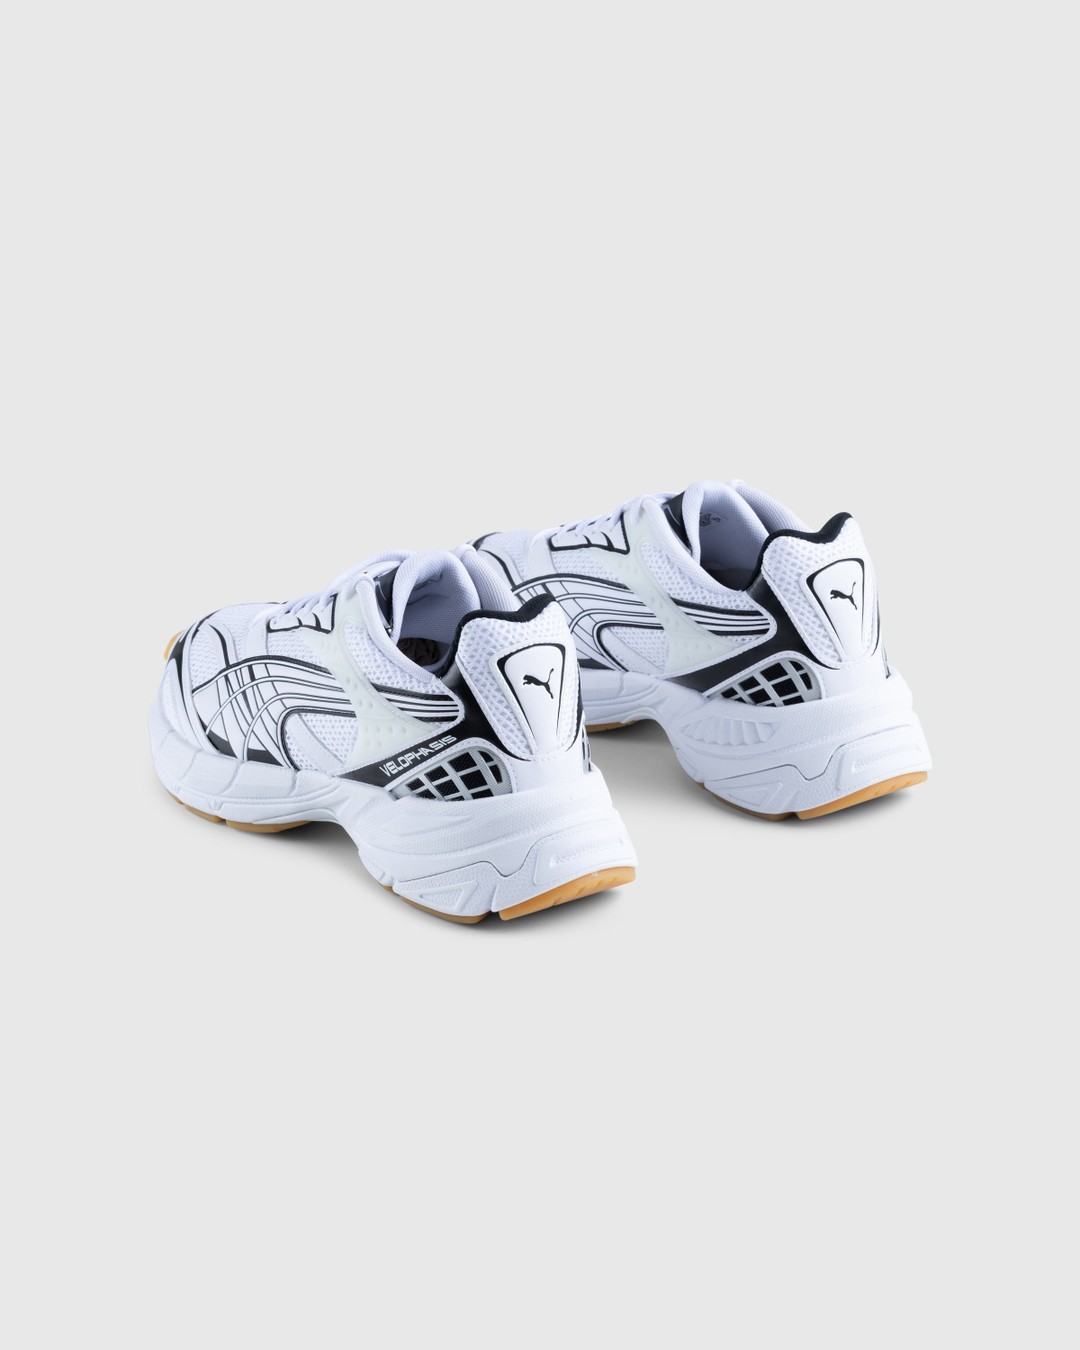 Puma – Velophasis Technisch White - Sneakers - White - Image 4